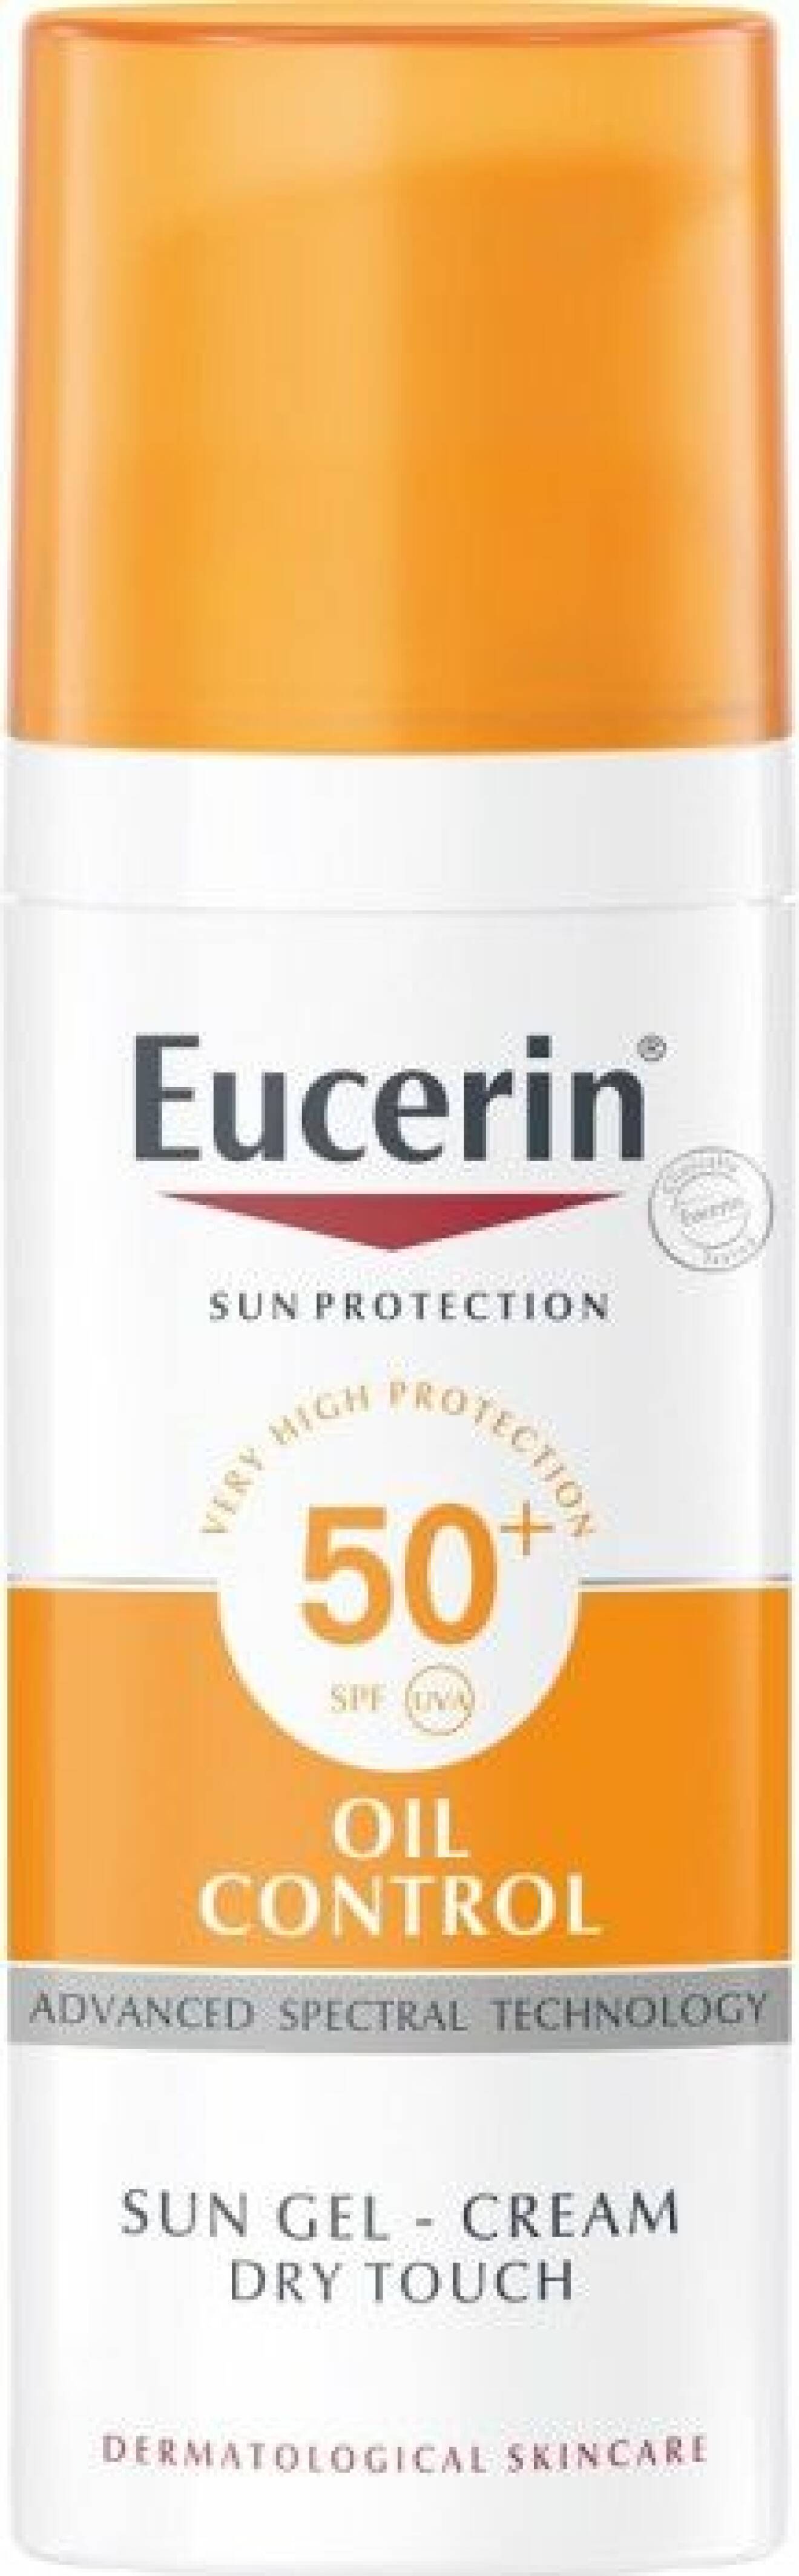 Eucerins Oil control SPF 50